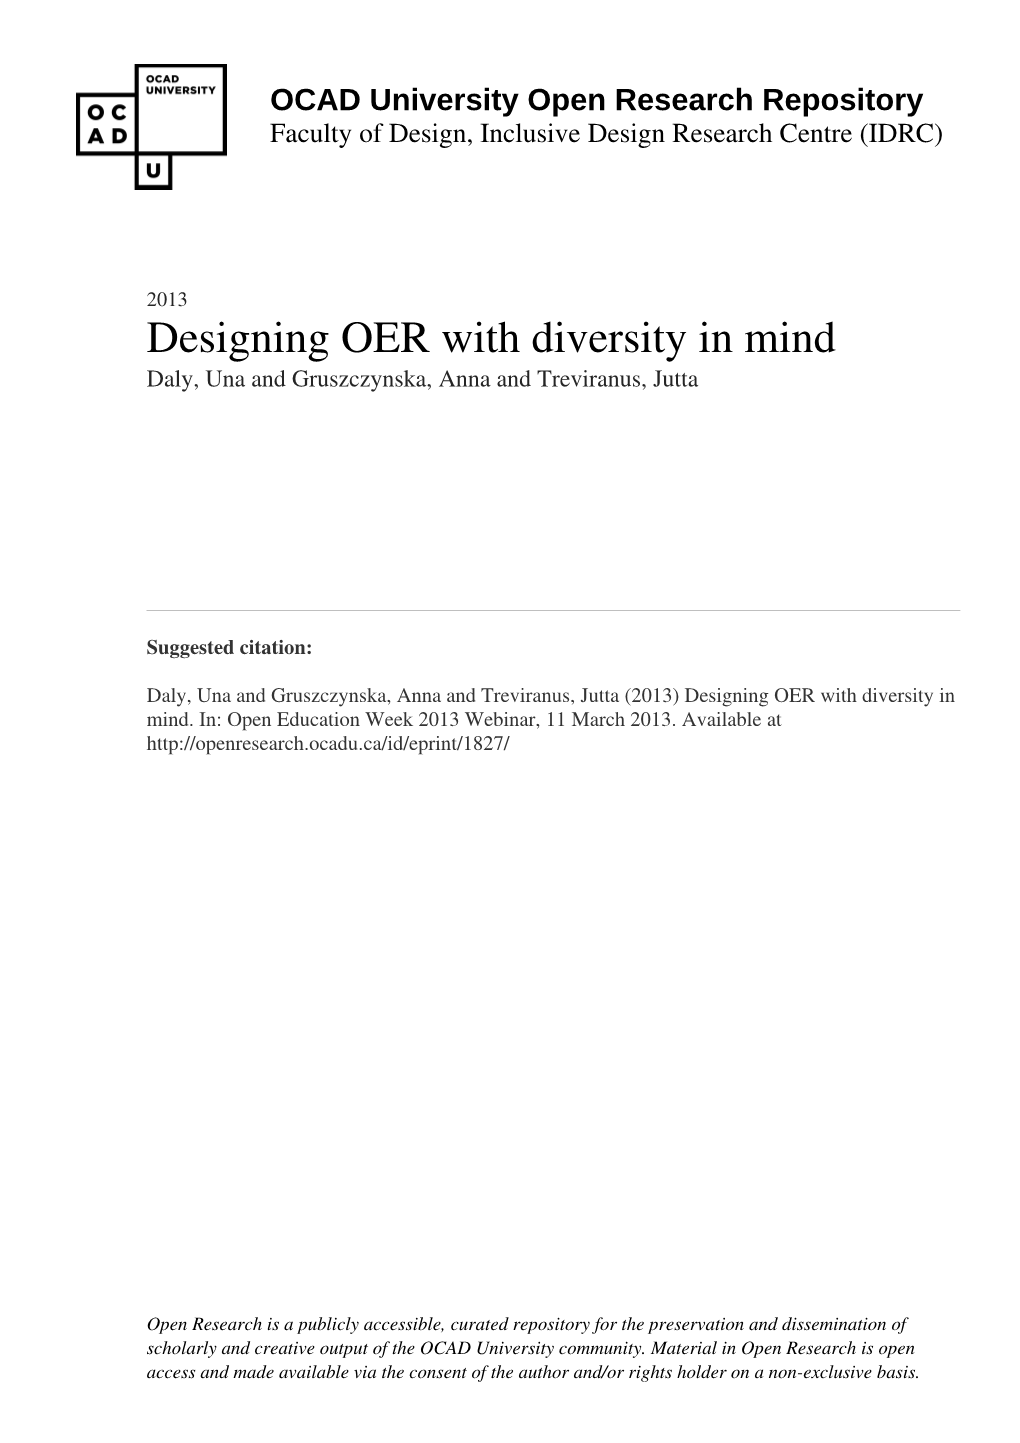 Designing OER with Diversity in Mind Daly, Una and Gruszczynska, Anna and Treviranus, Jutta